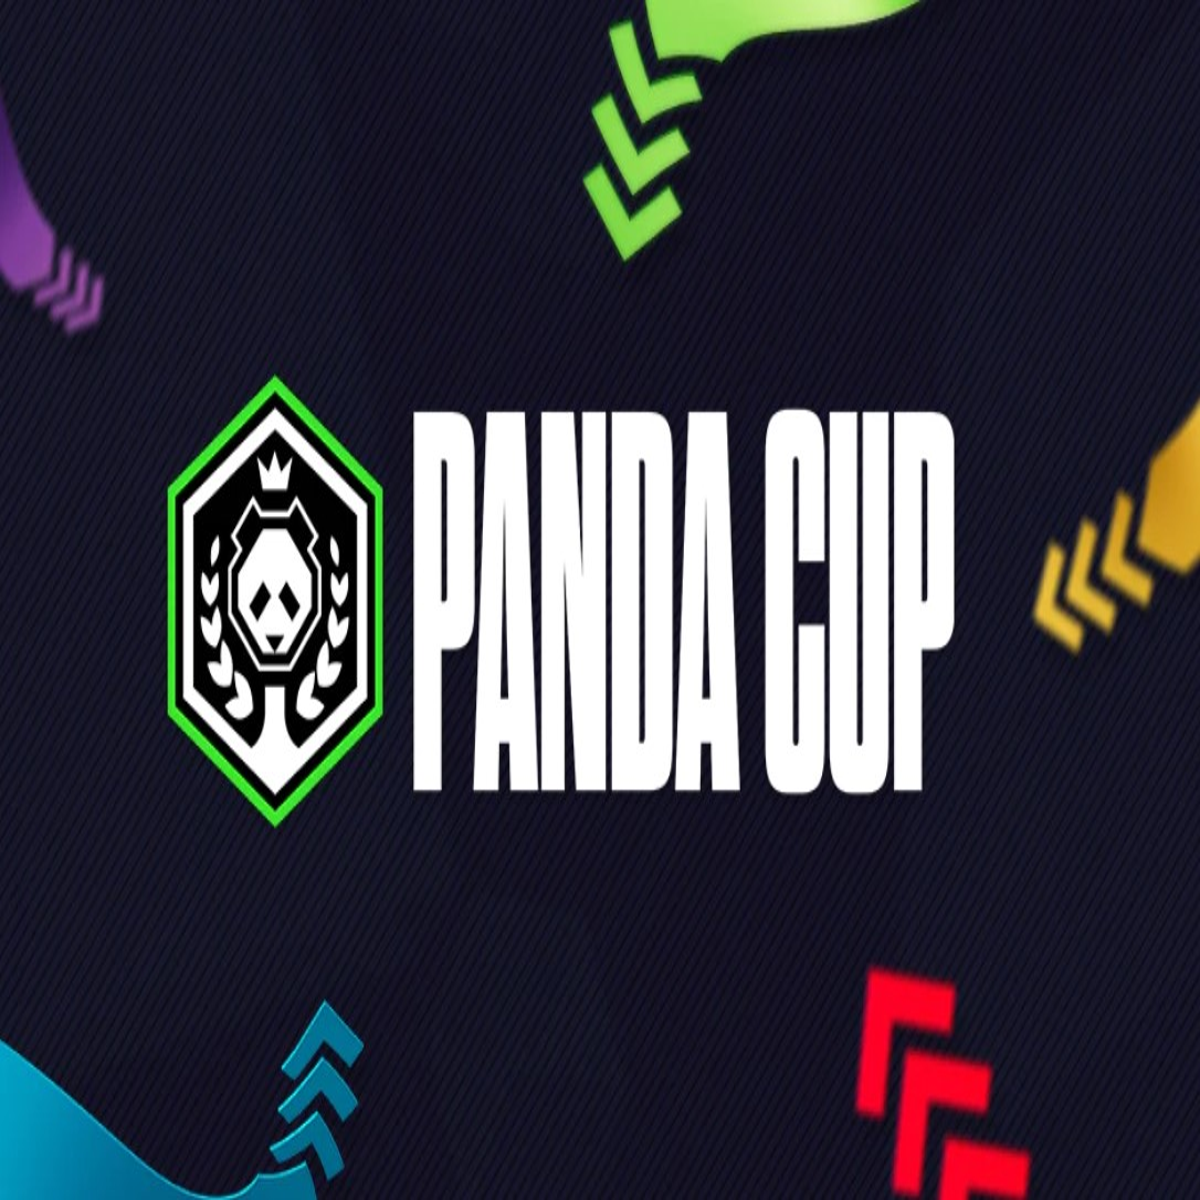 Panda Cup ft Super Smash Bros.™